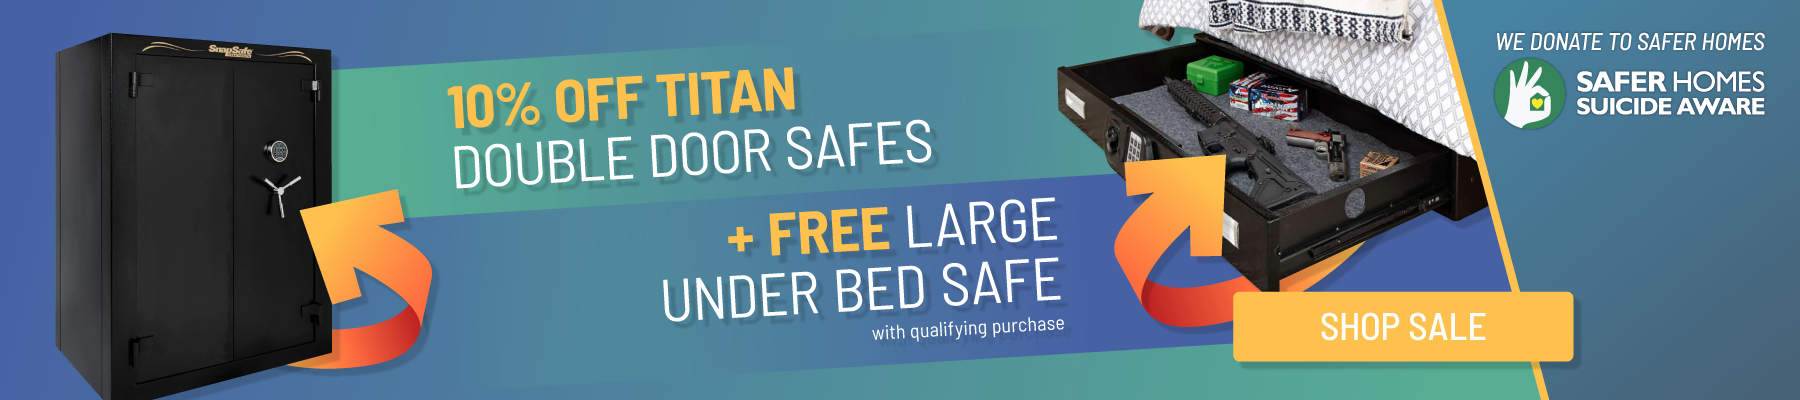 10% off a Super Titan Double Door + FREE Large Under Bed Safe